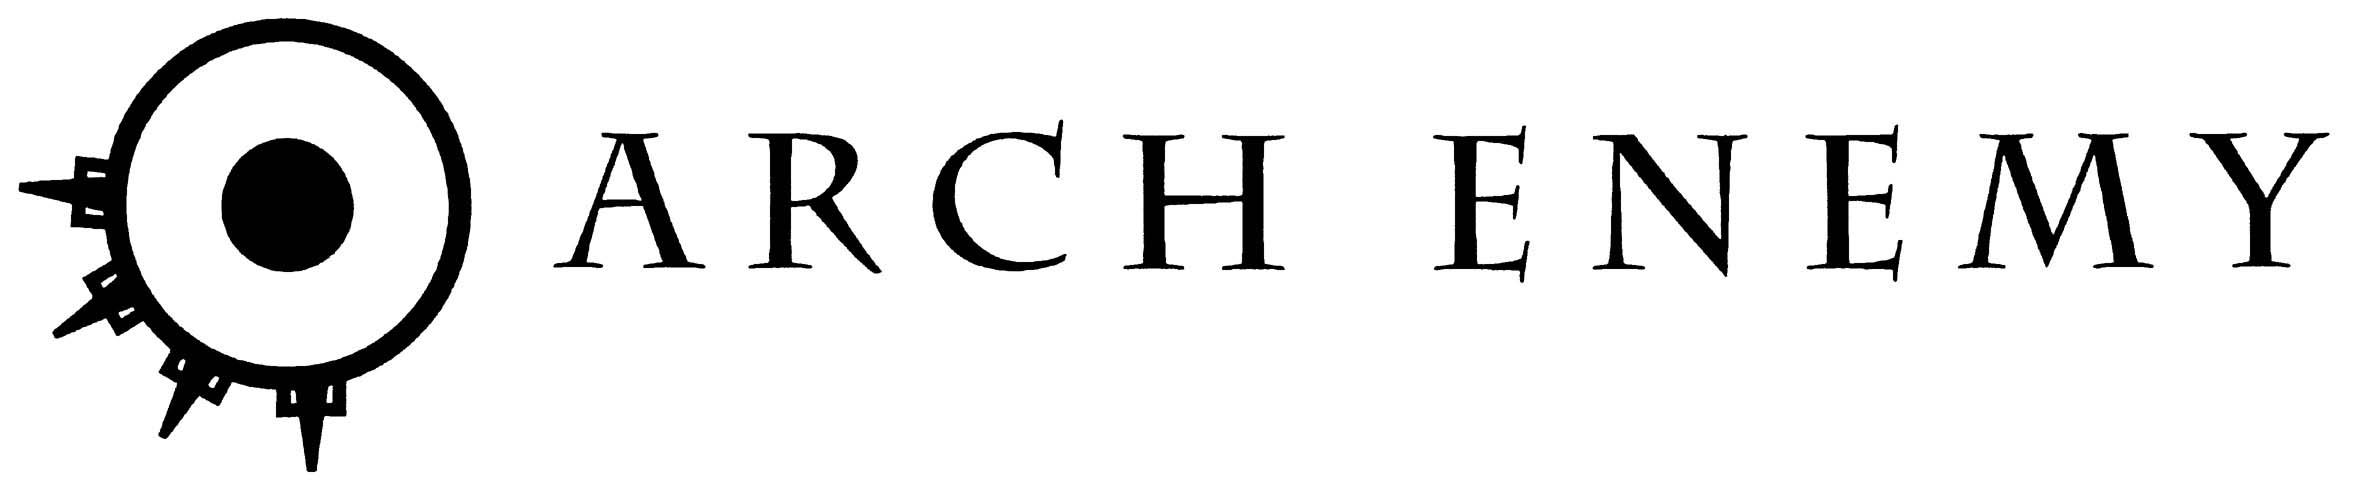 Arch Enemy Decal / Sticker 01